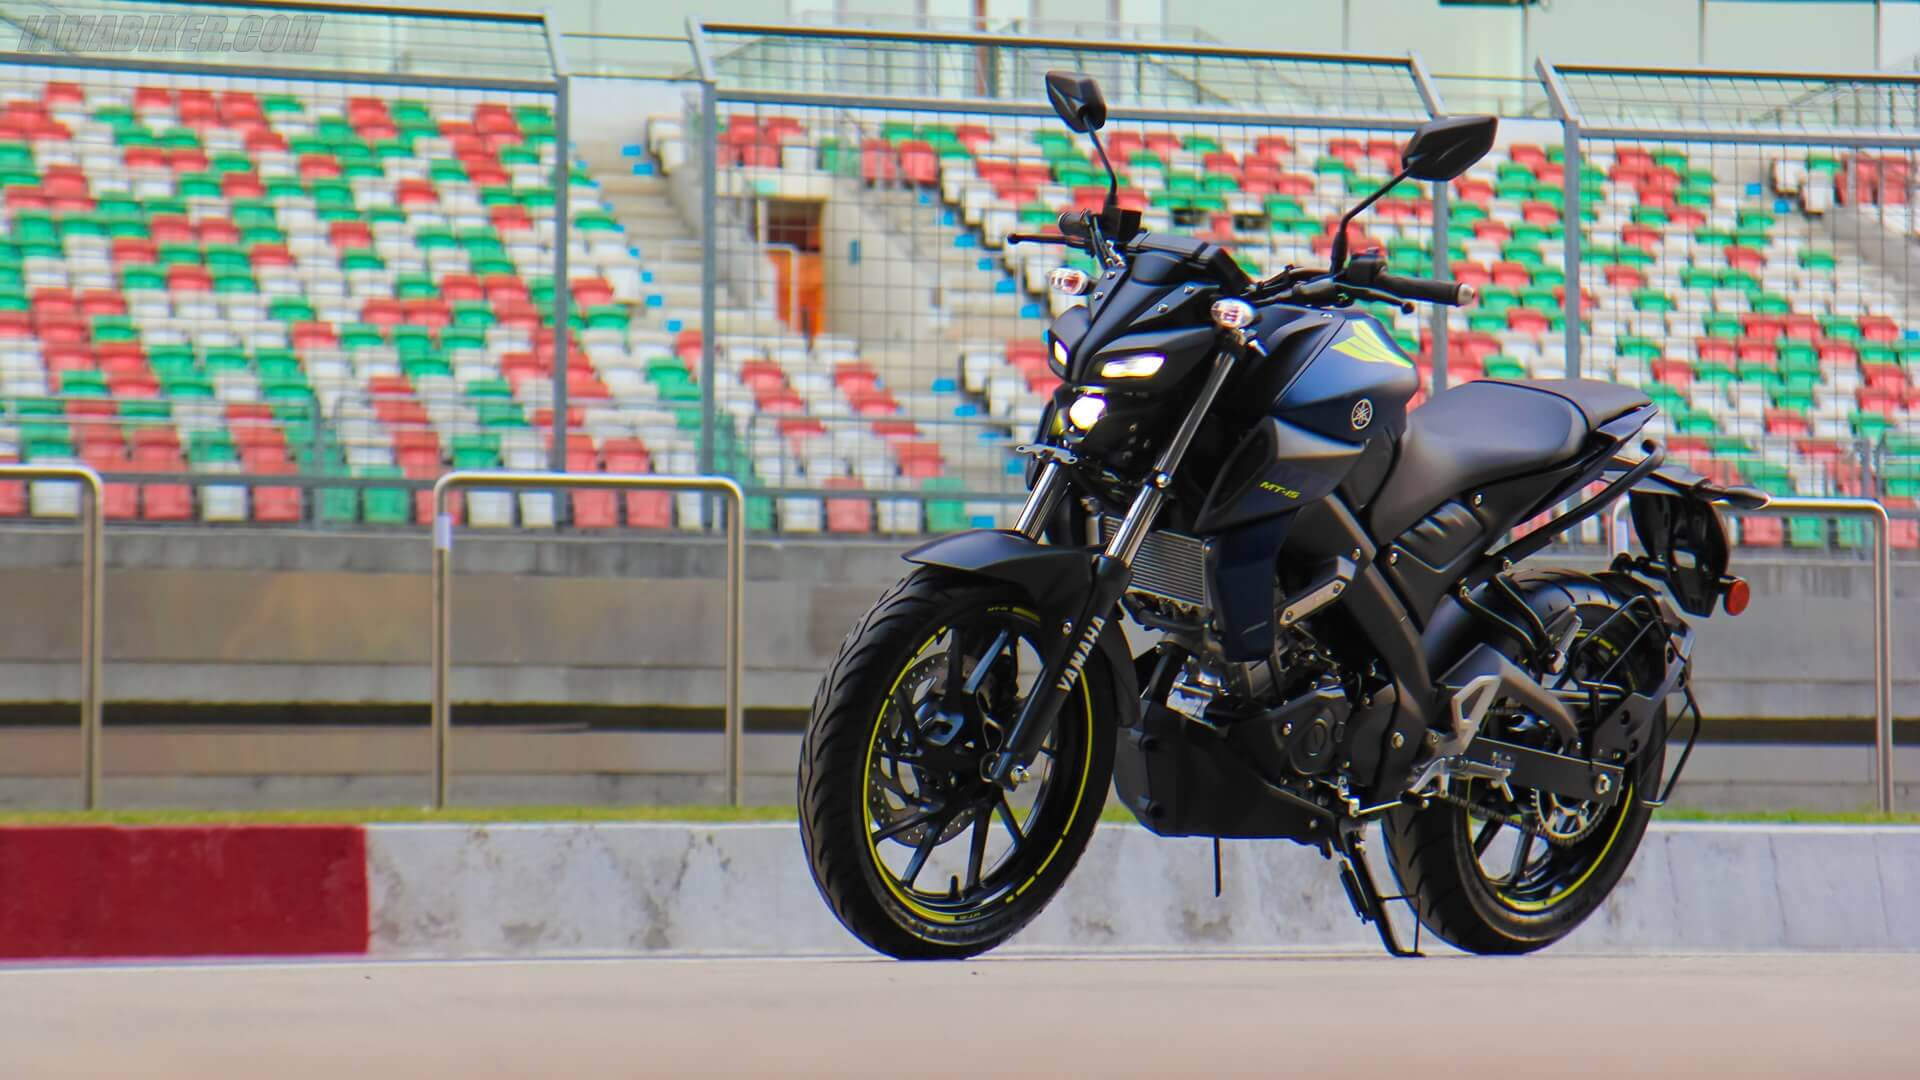 Nero Yamaha Mt 15 In Uno Stadio Sfondo